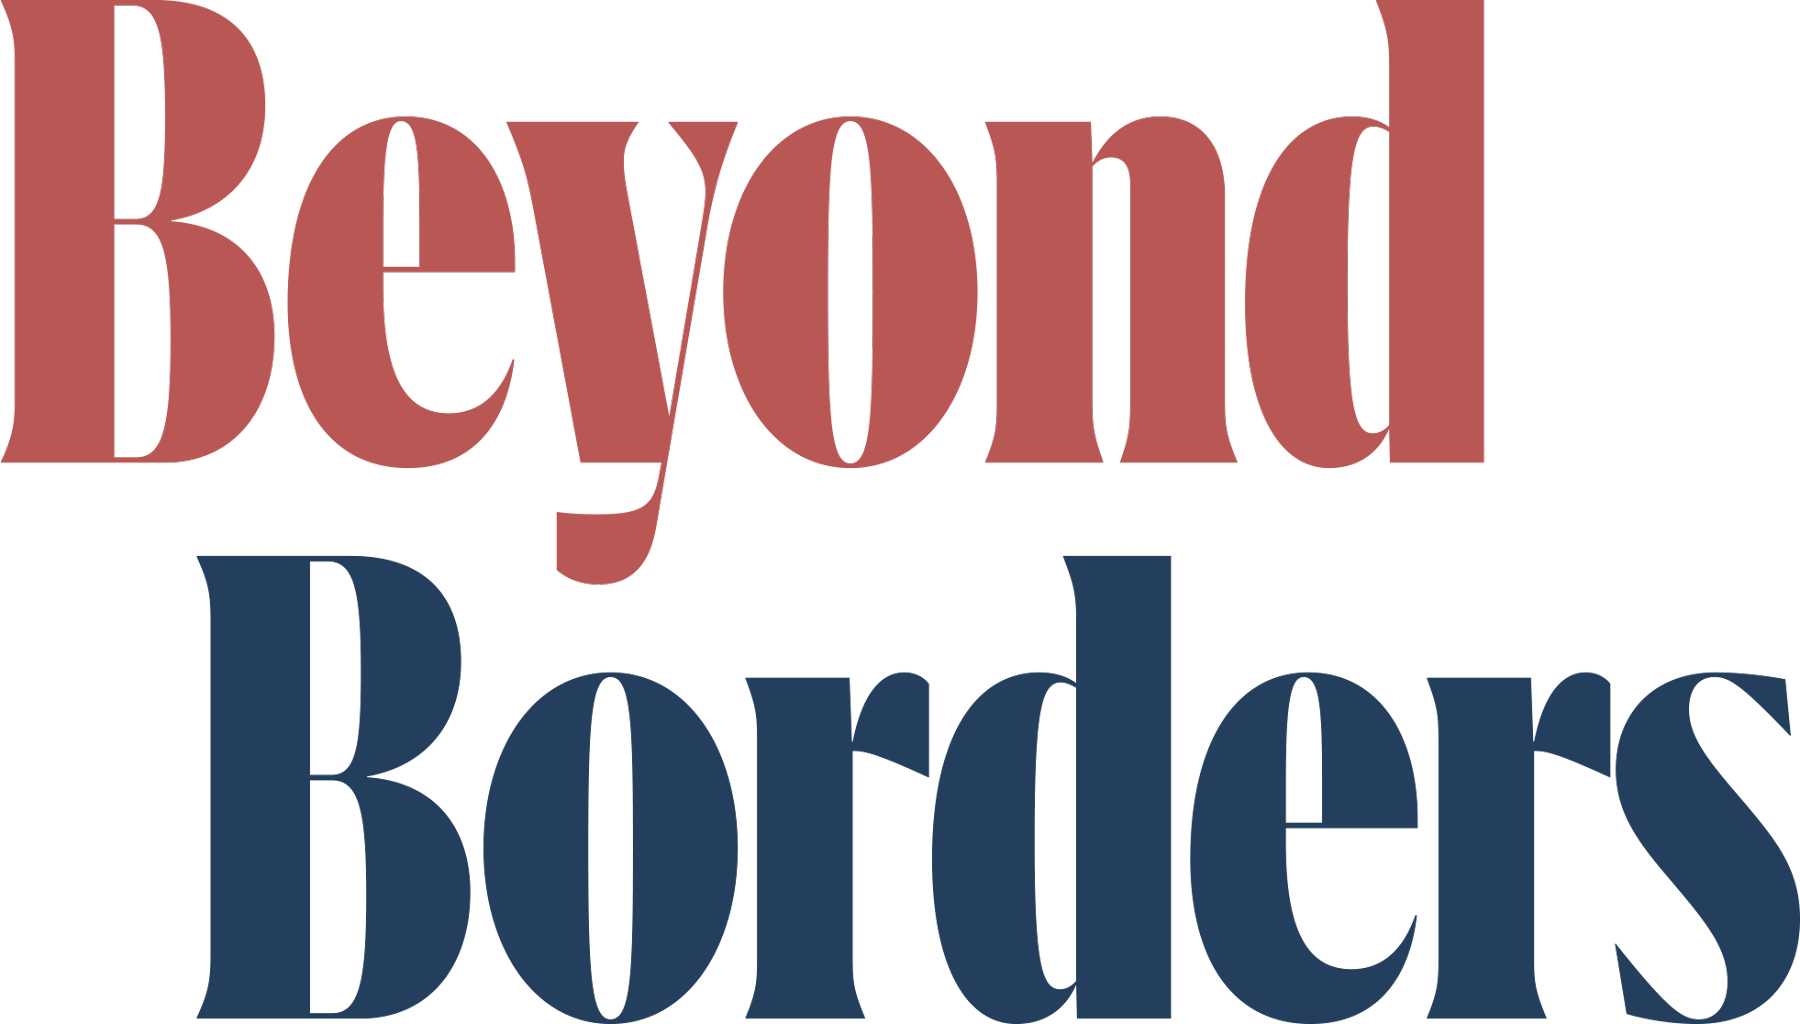 Beyond Borders title